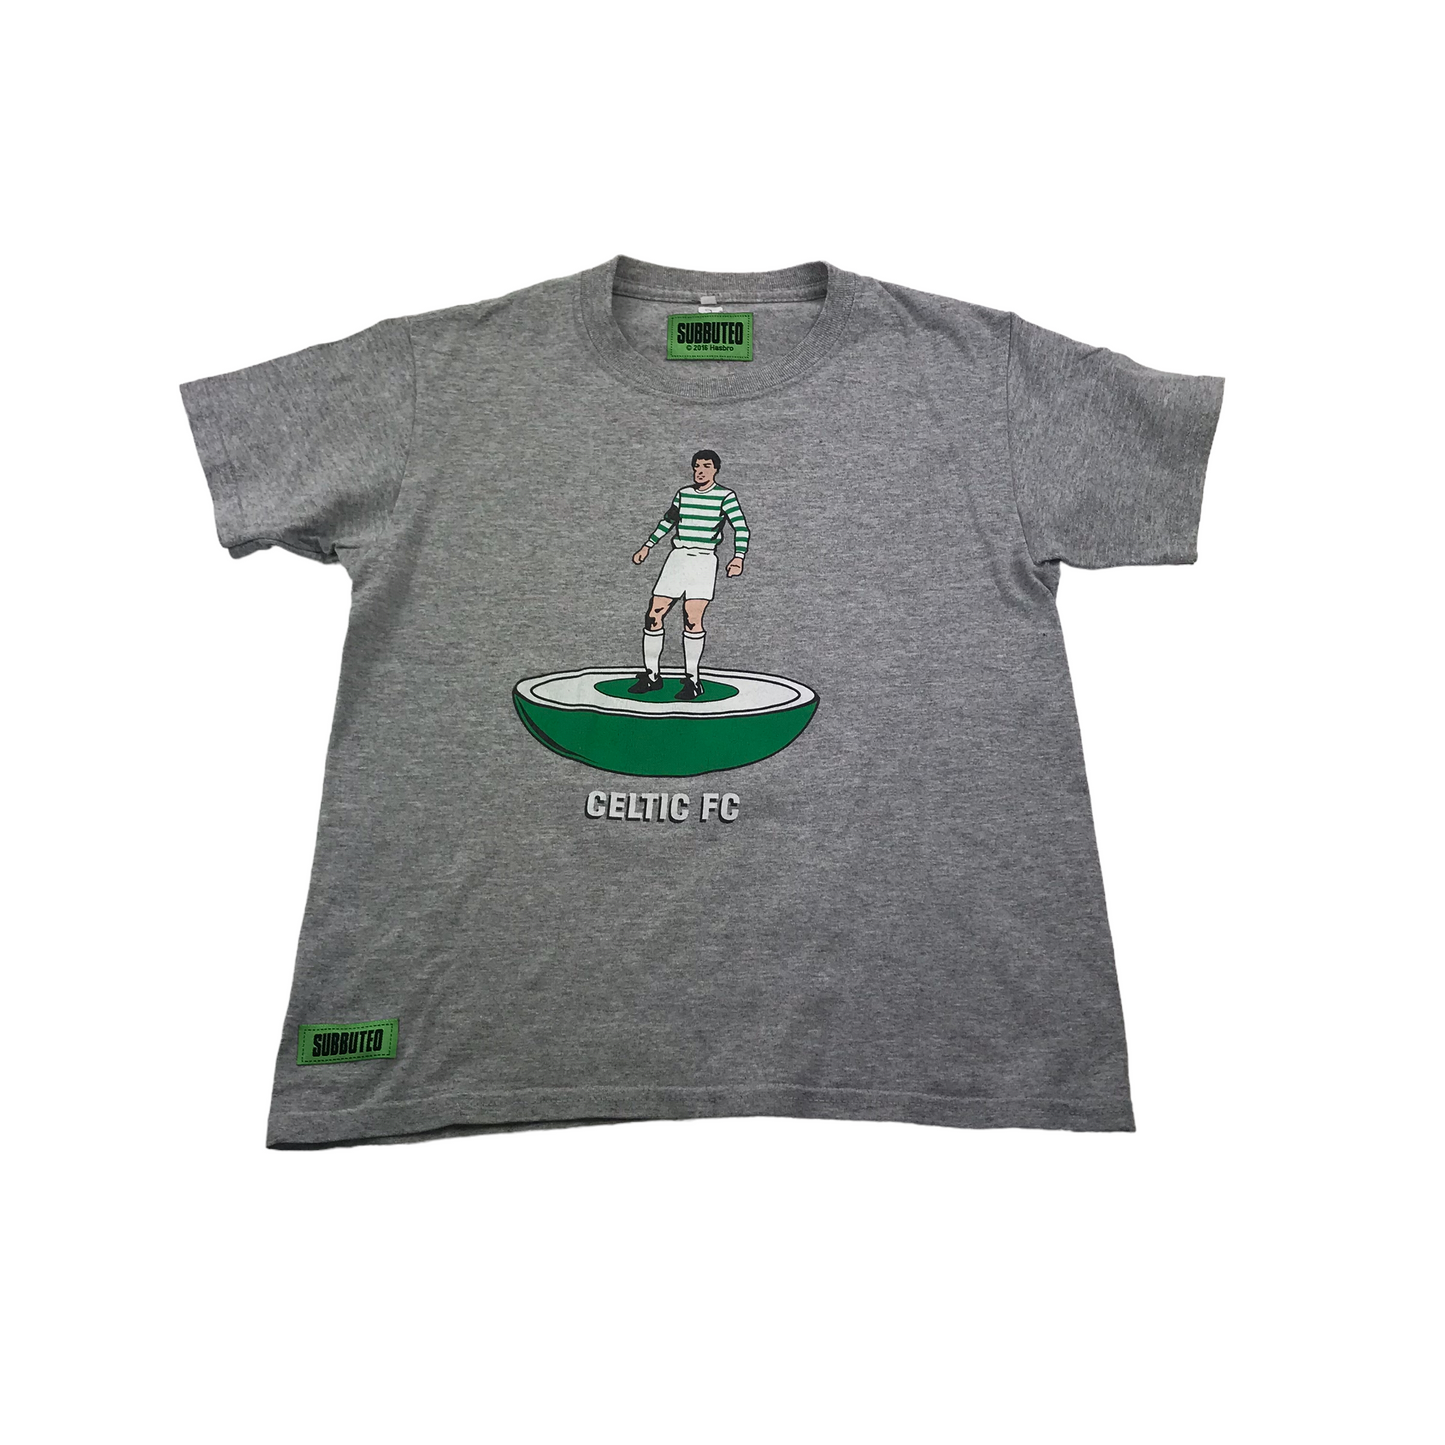 Subbuteo Hasbro Celtic FC Grey T-shirt Age 9